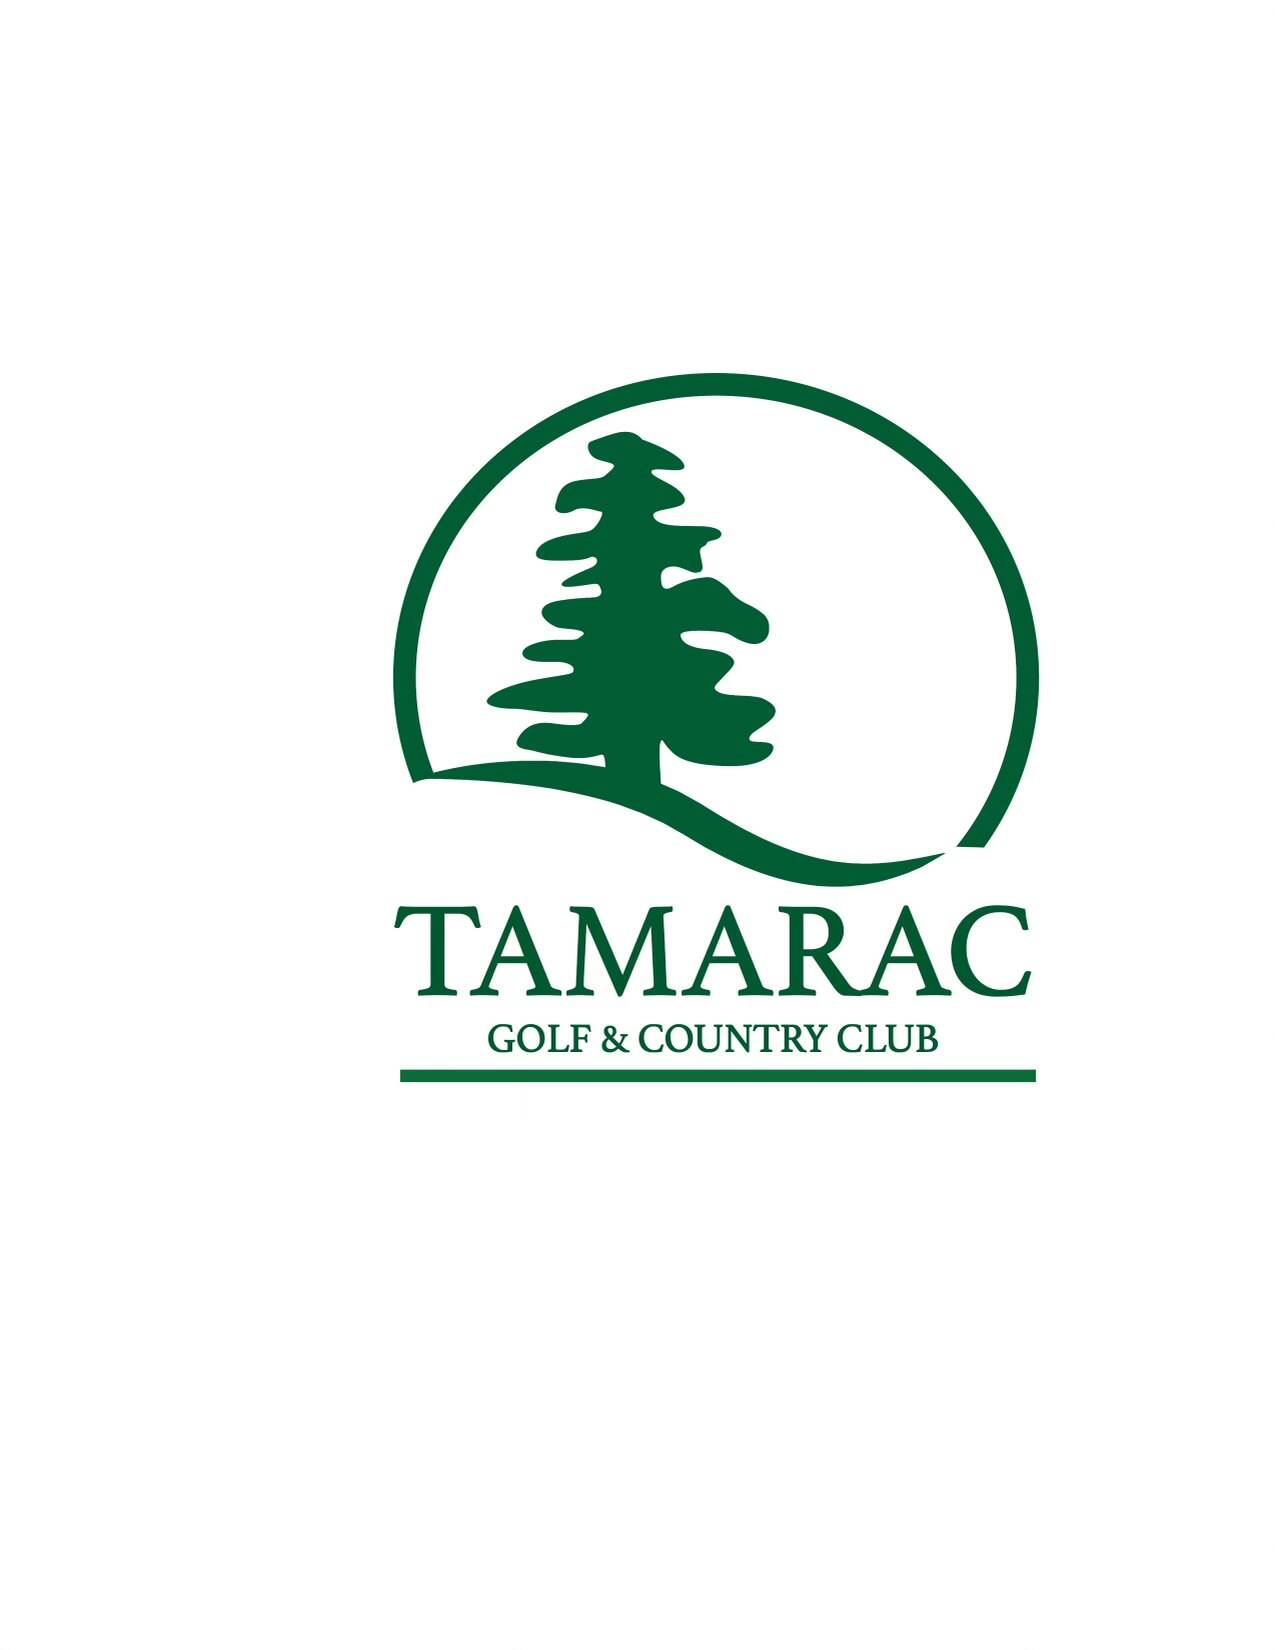 Tamarac Golf and Country Club